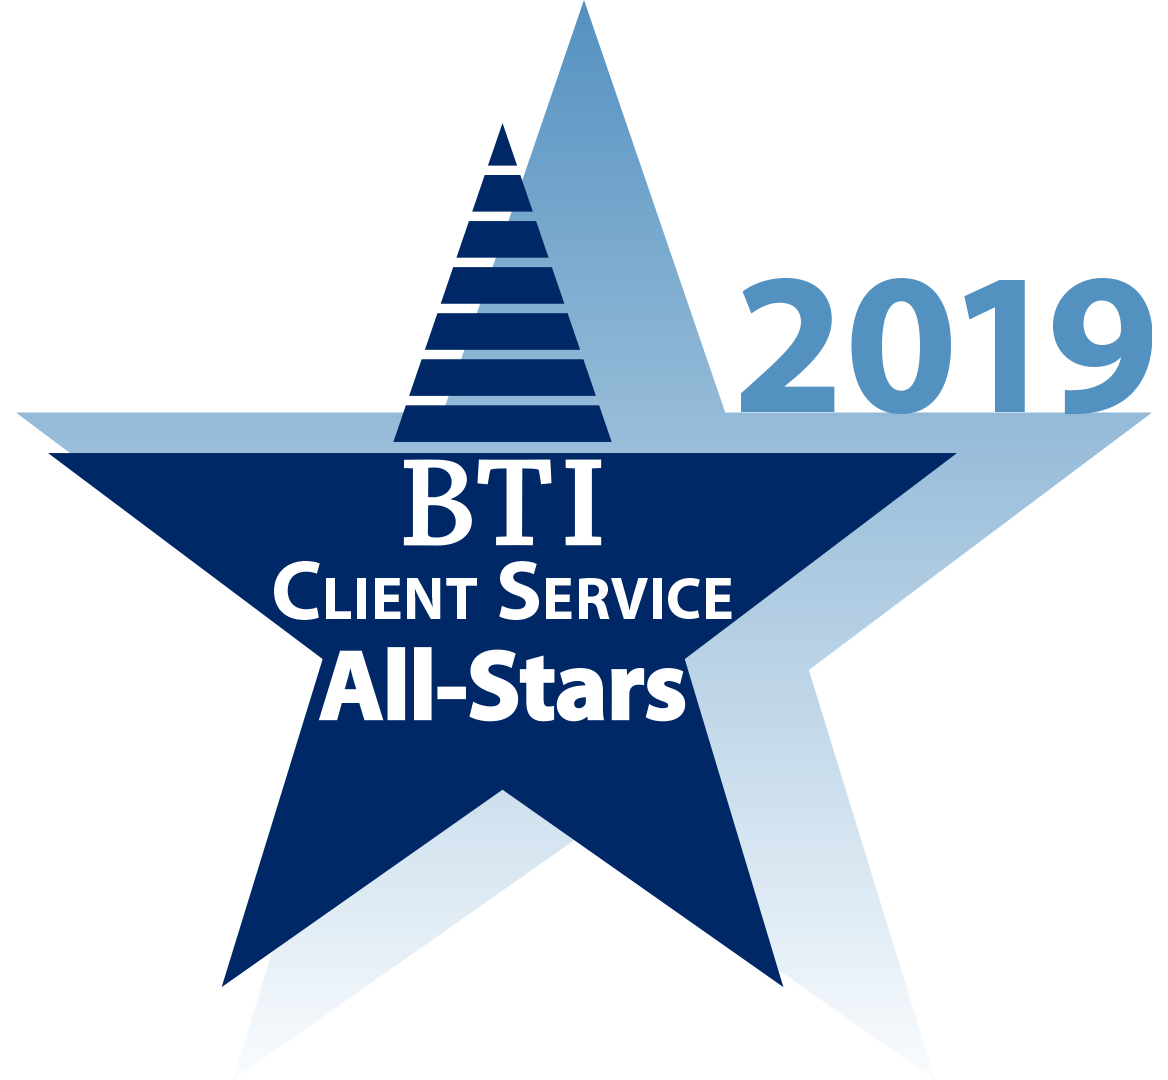 BTI Client Service All Stars 2019 logo